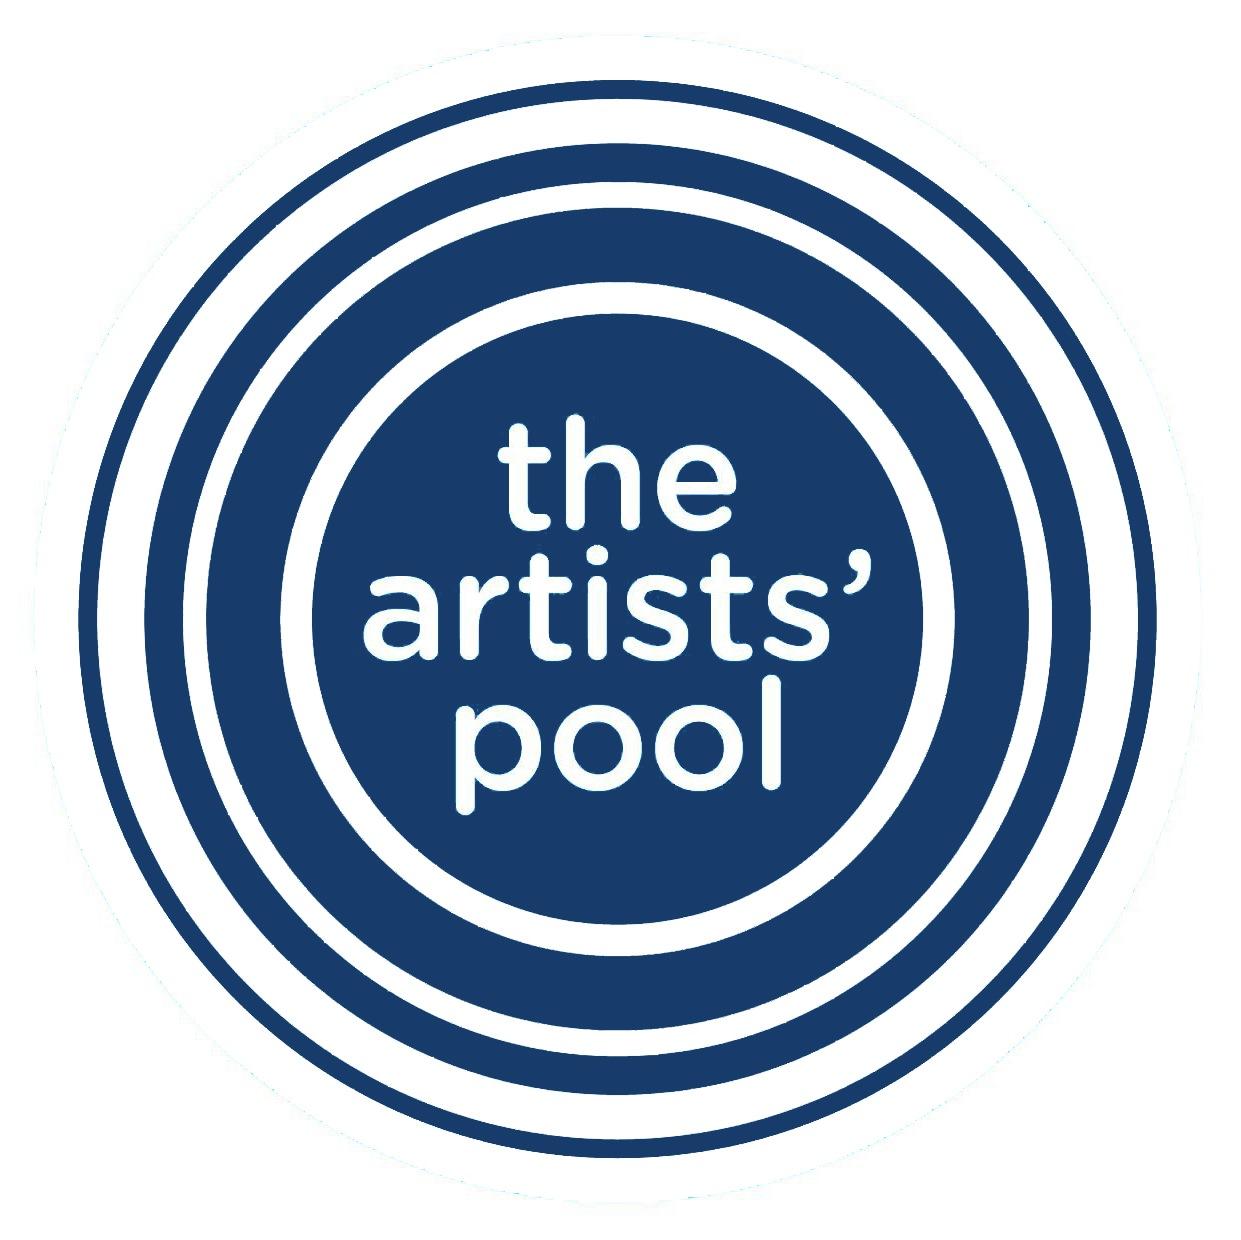 the artists' poolさんのプロフィール画像